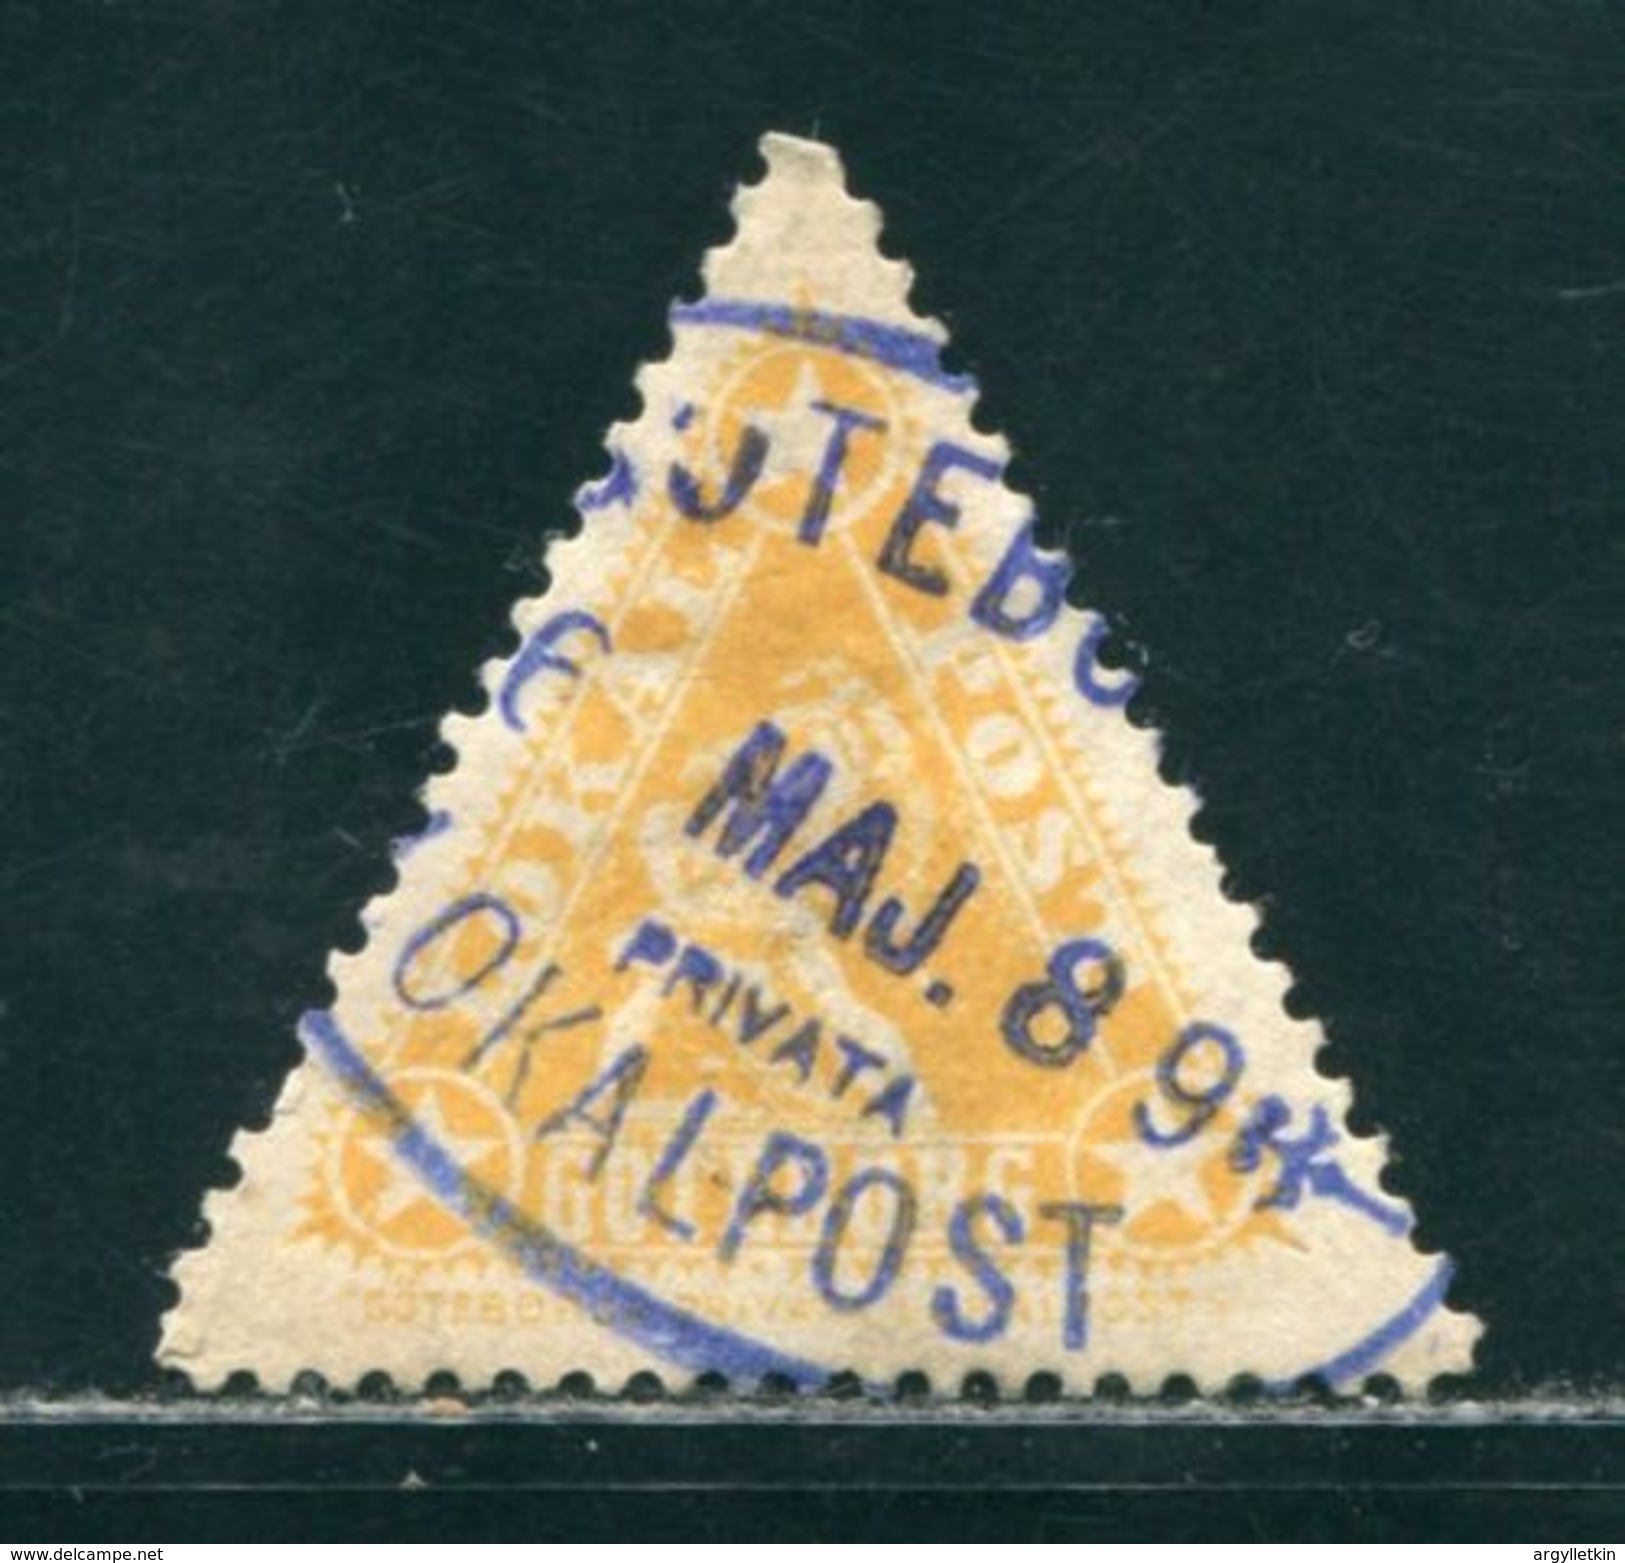 SWEDEN GOTEBORG CITY POST TRIANGULAR STAMP 1898 - Local Post Stamps